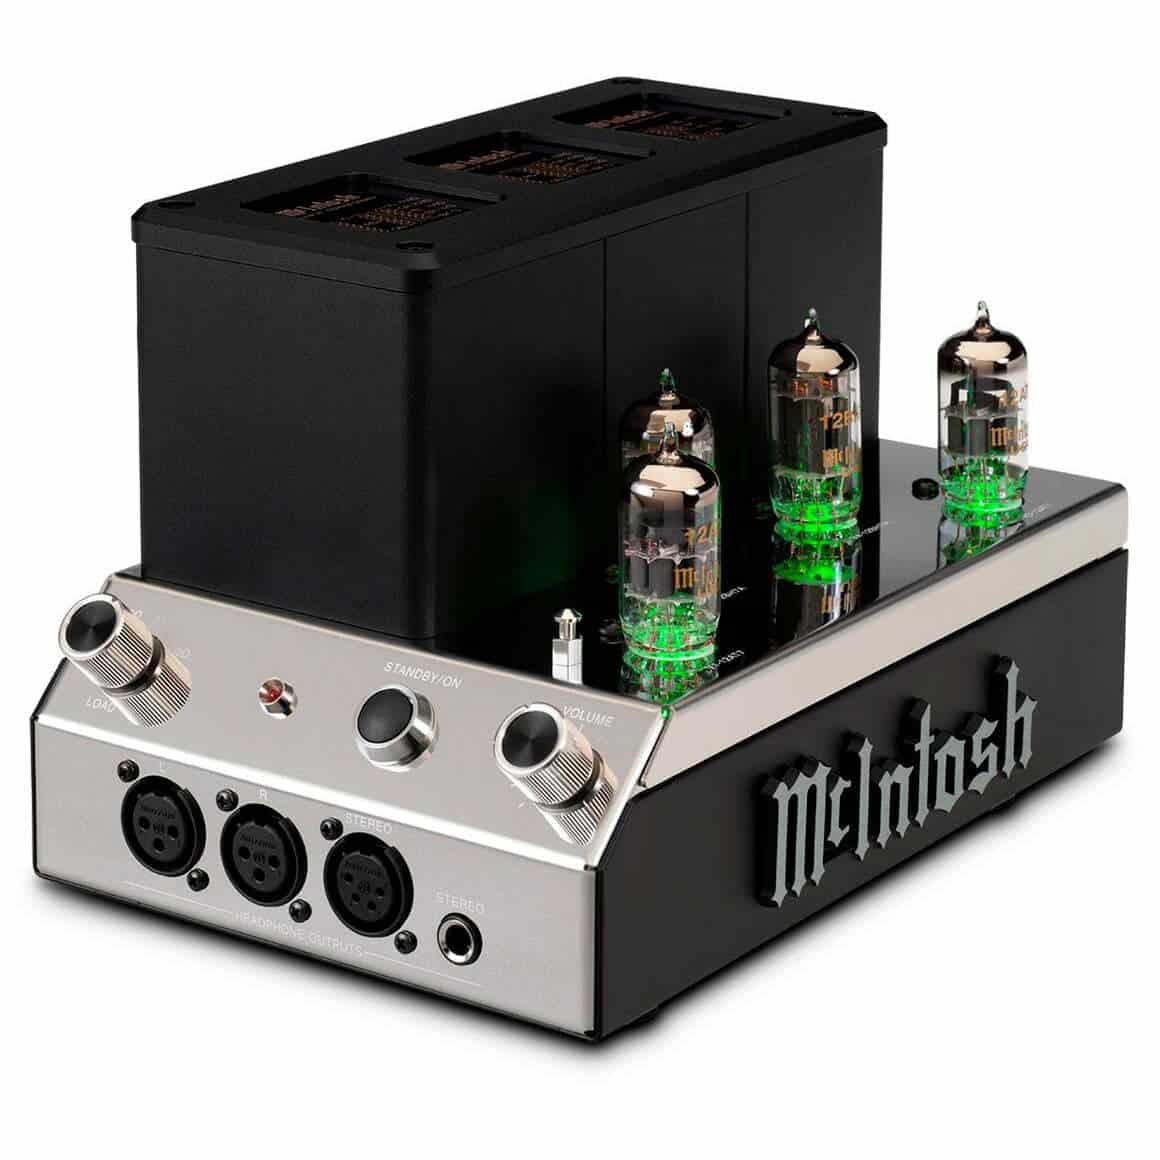 McIntosh MHA200 Vacuum Tube Headphone Amplifier